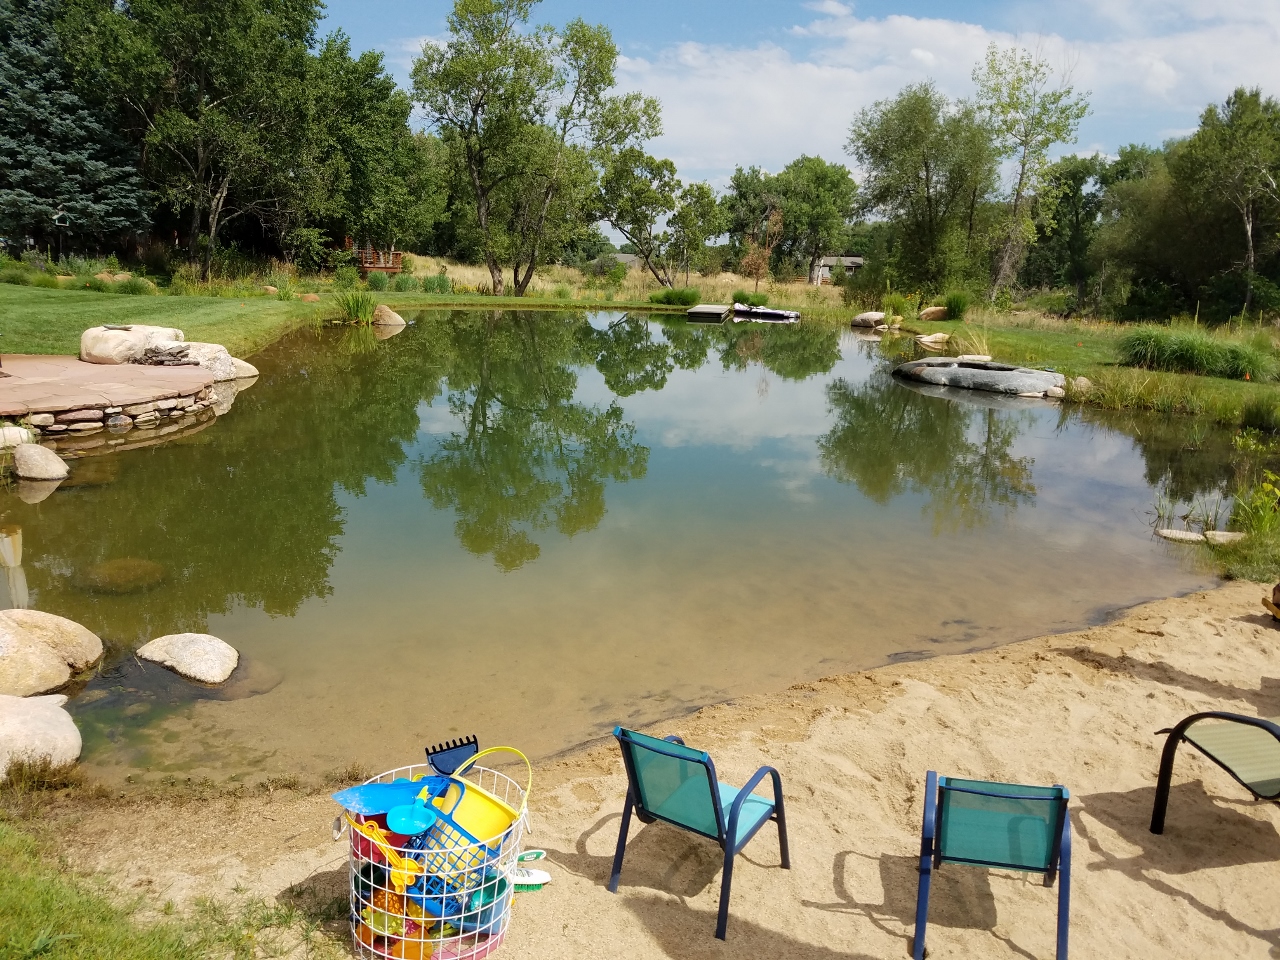 New Pond Creation for Recreation and Wildlife Habitat